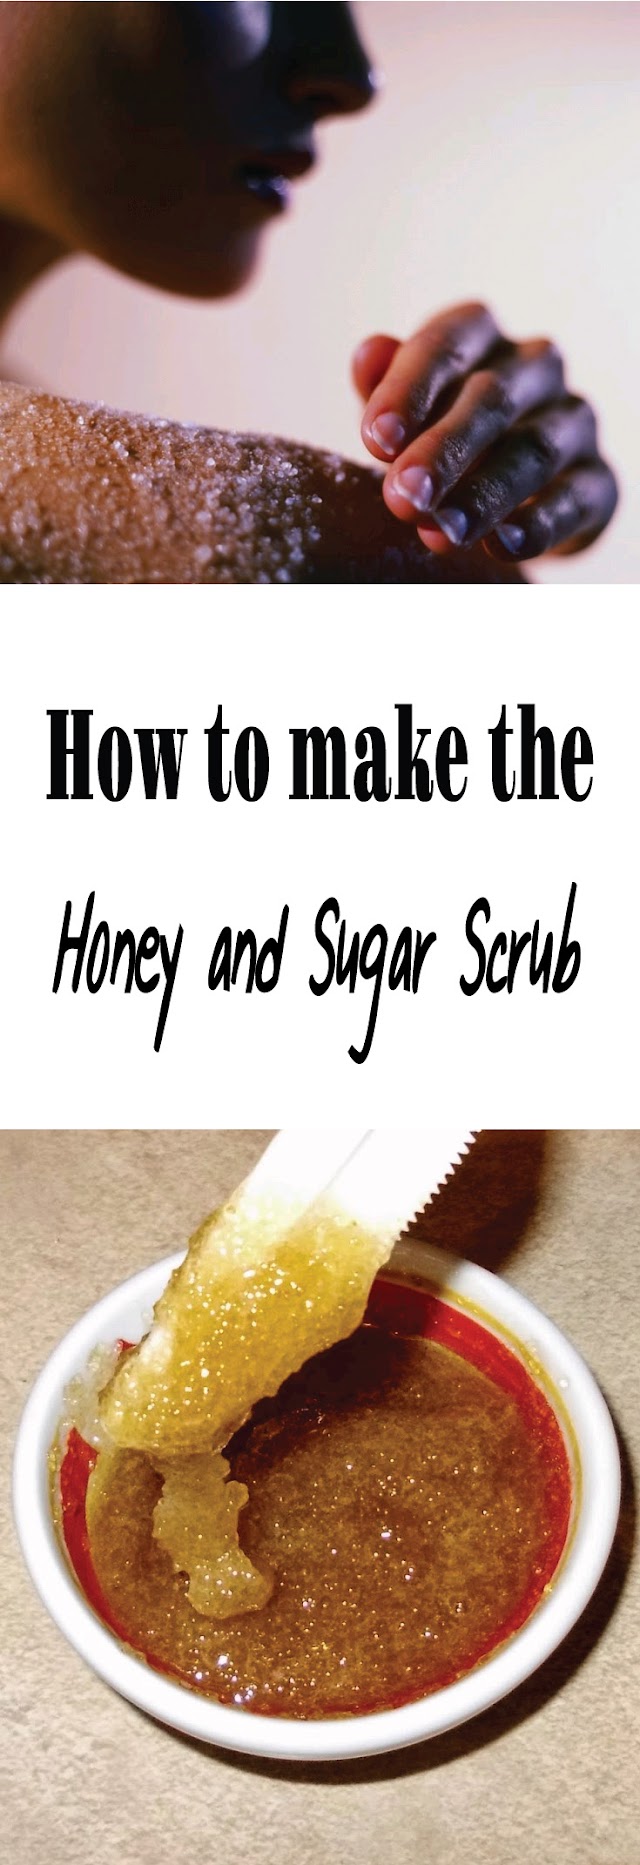 How to make the honey and sugar scrub